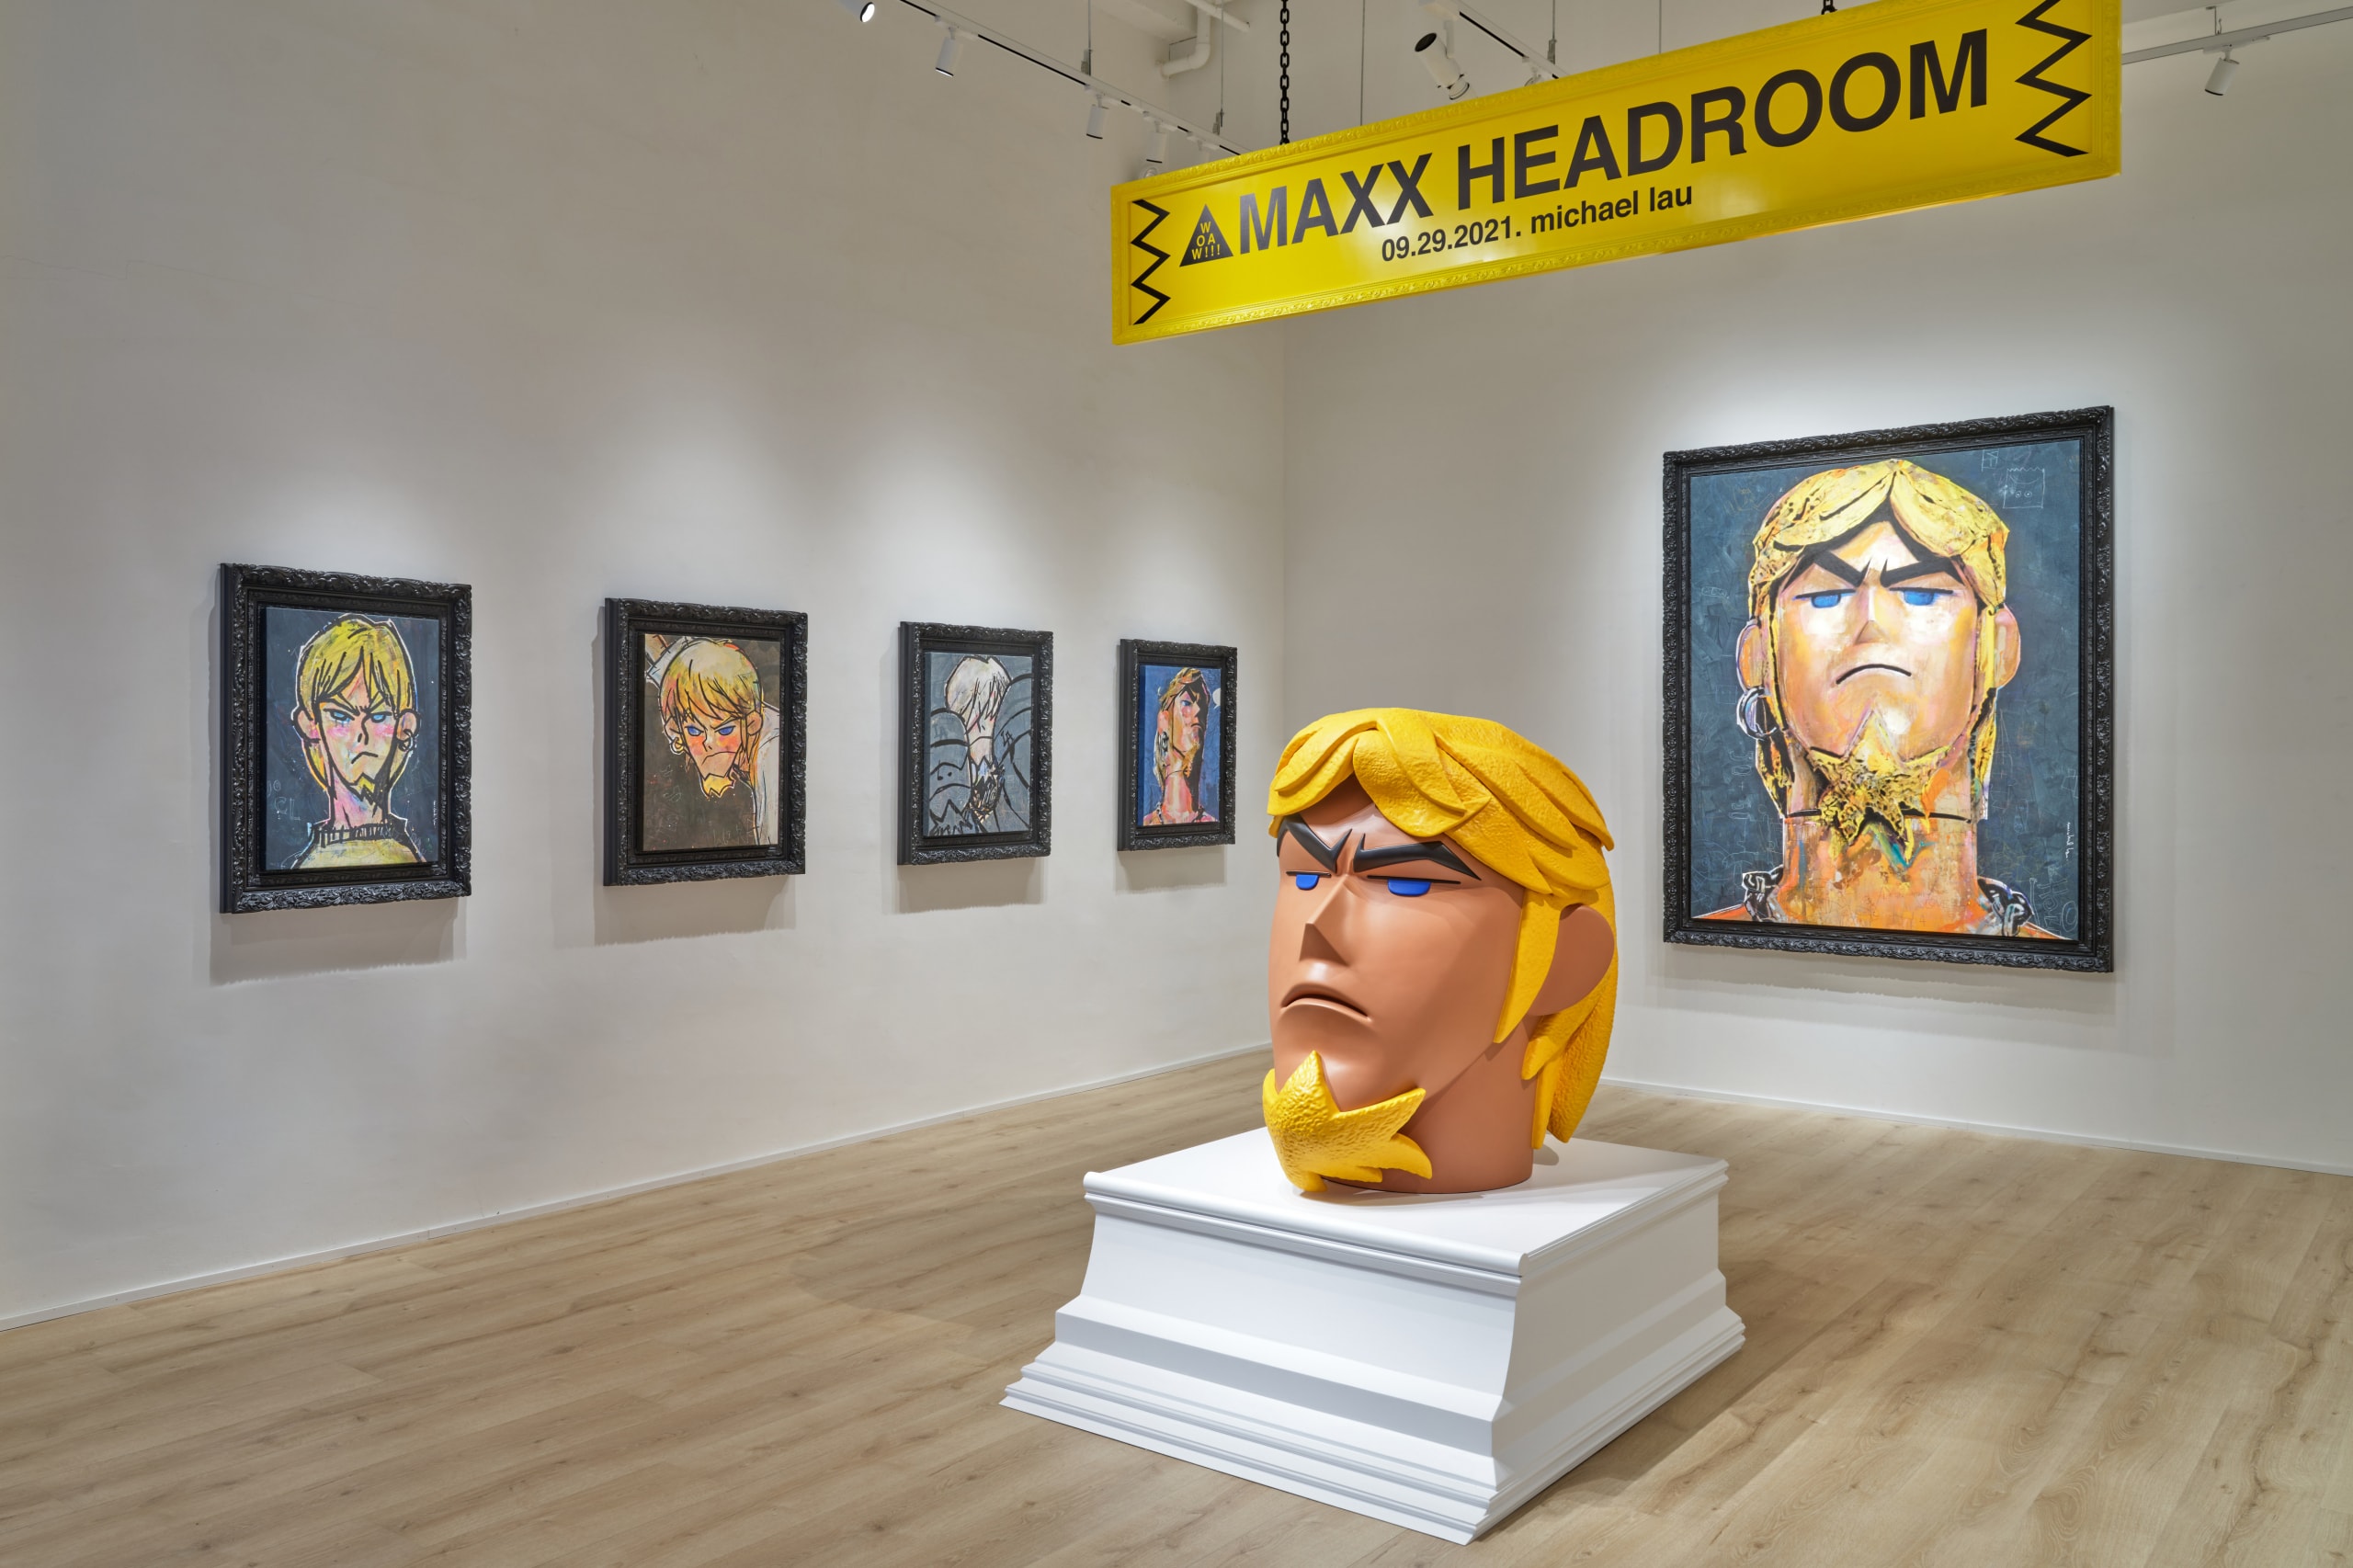 走进 Michael Lau 全新个展「MAXX HEADROOM」@ Woaw Gallery